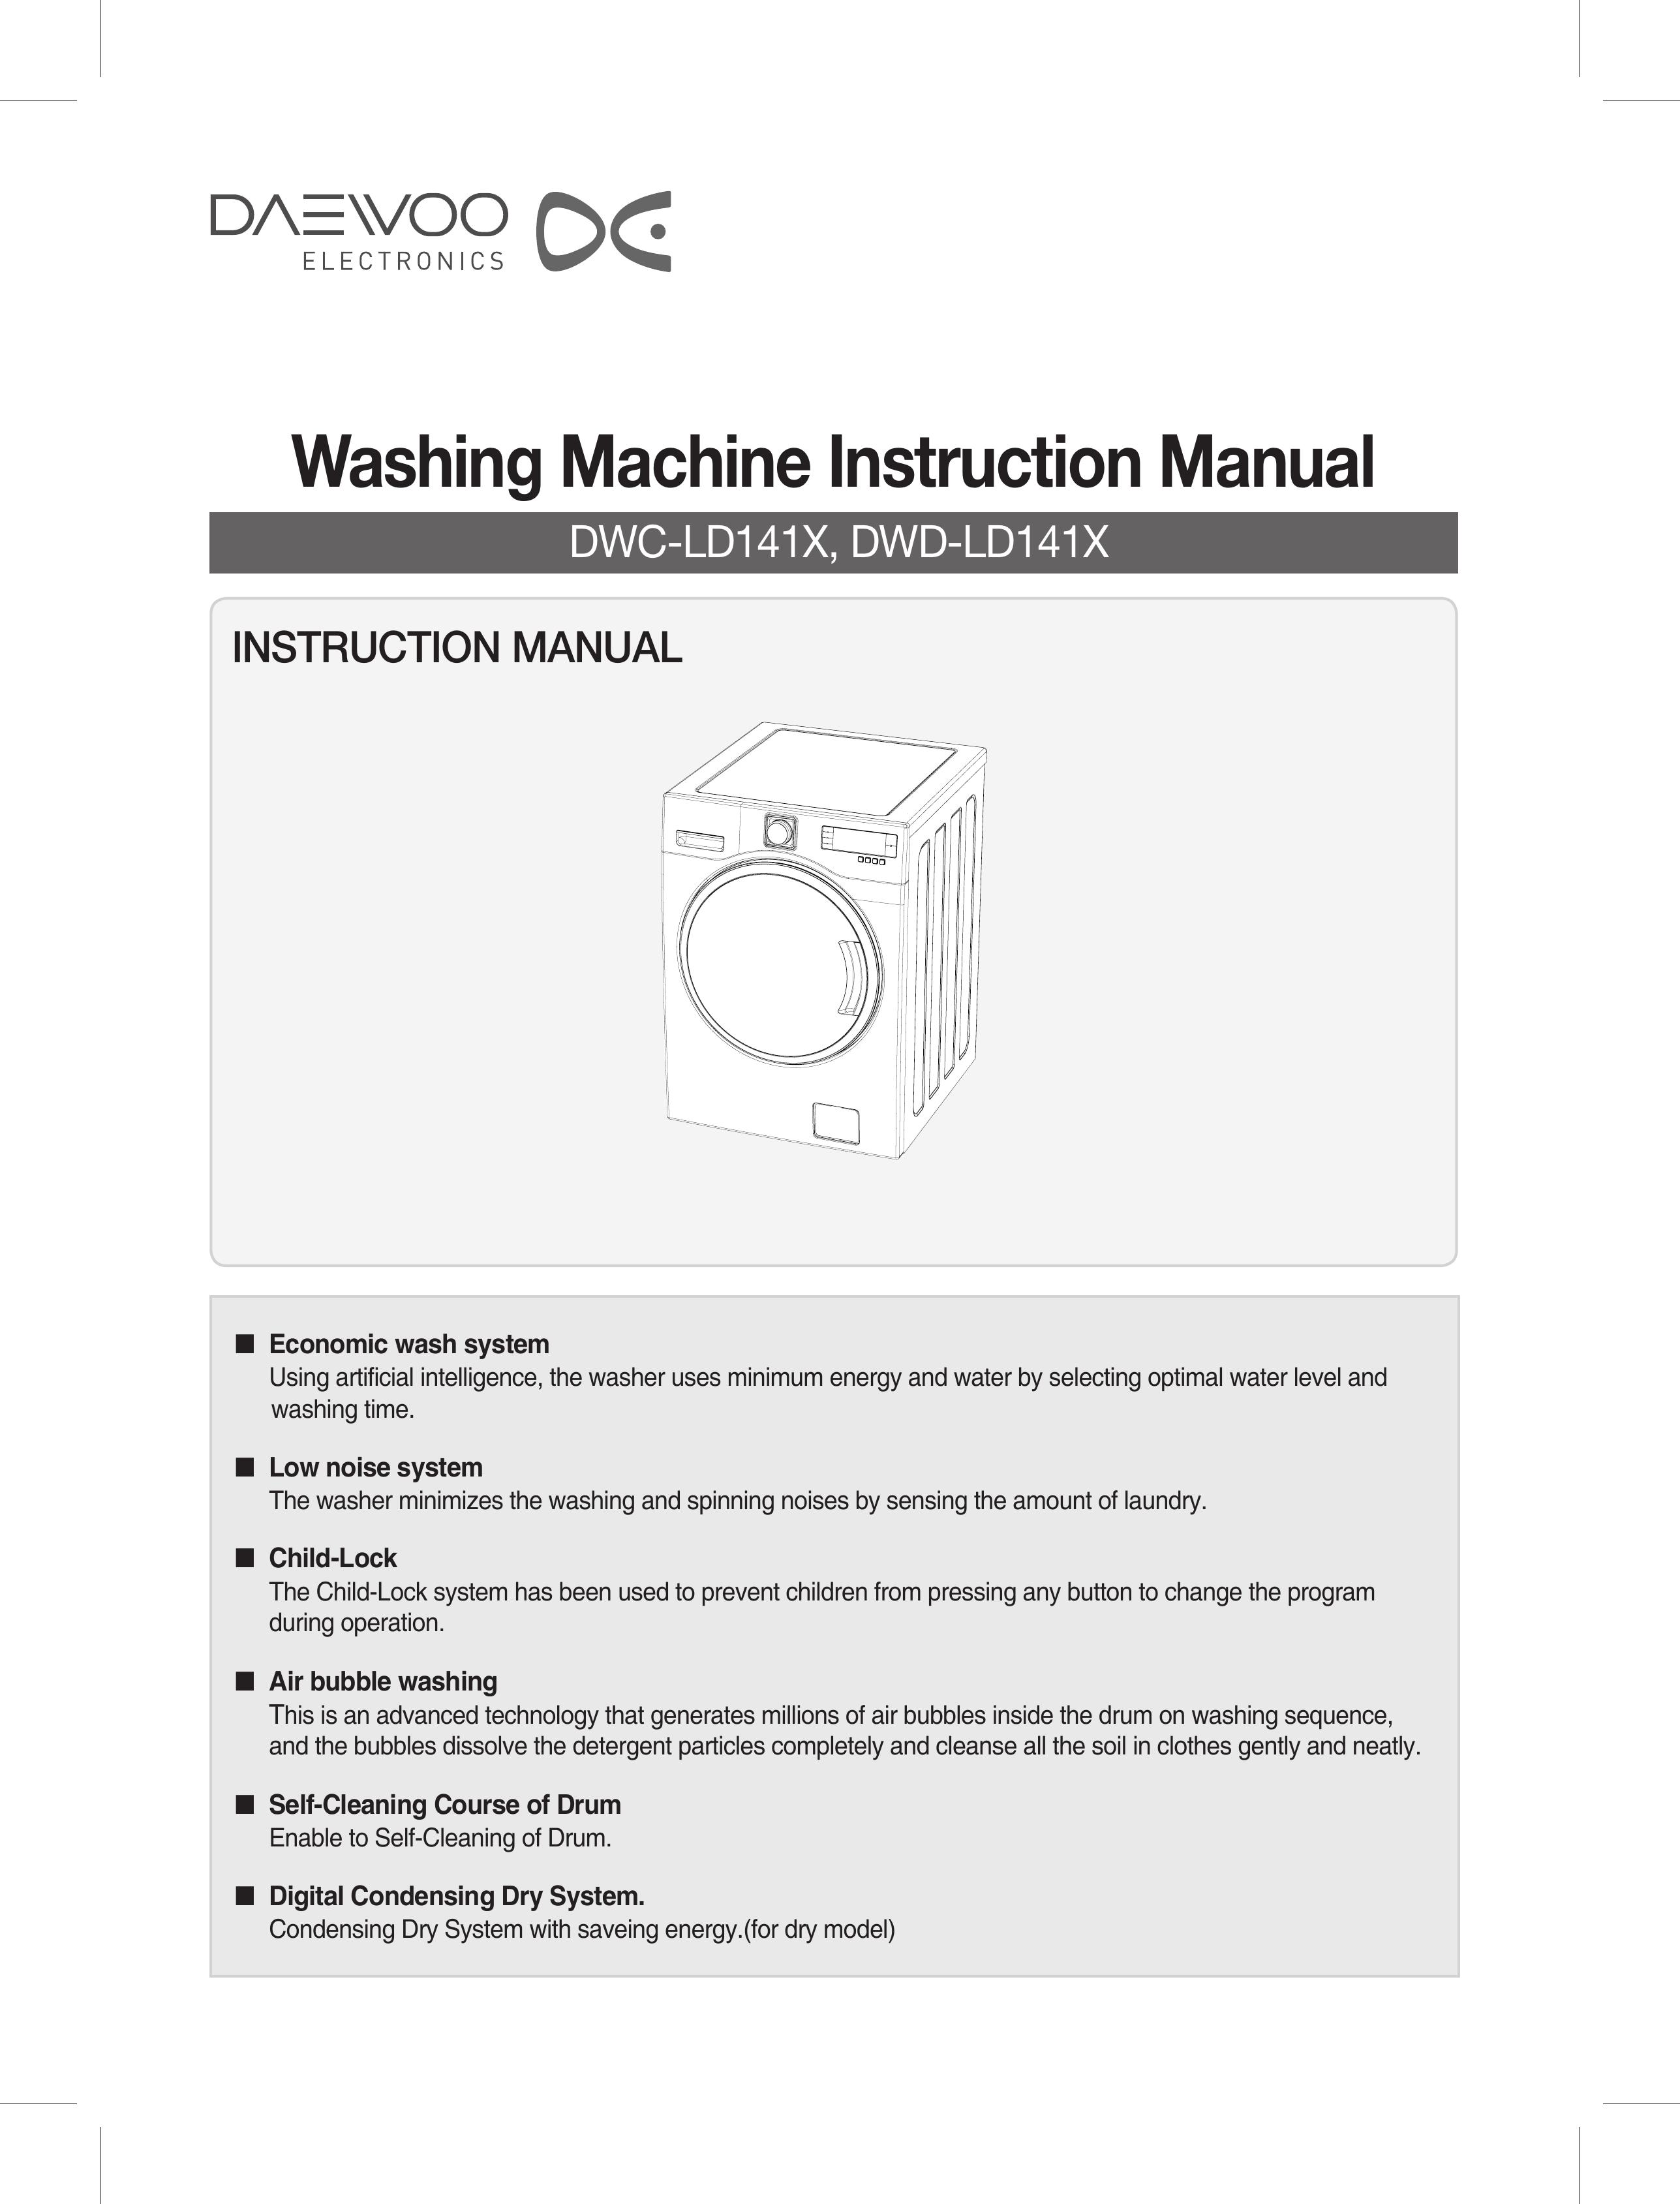 Daewoo DWD-LD141X Washer User Manual